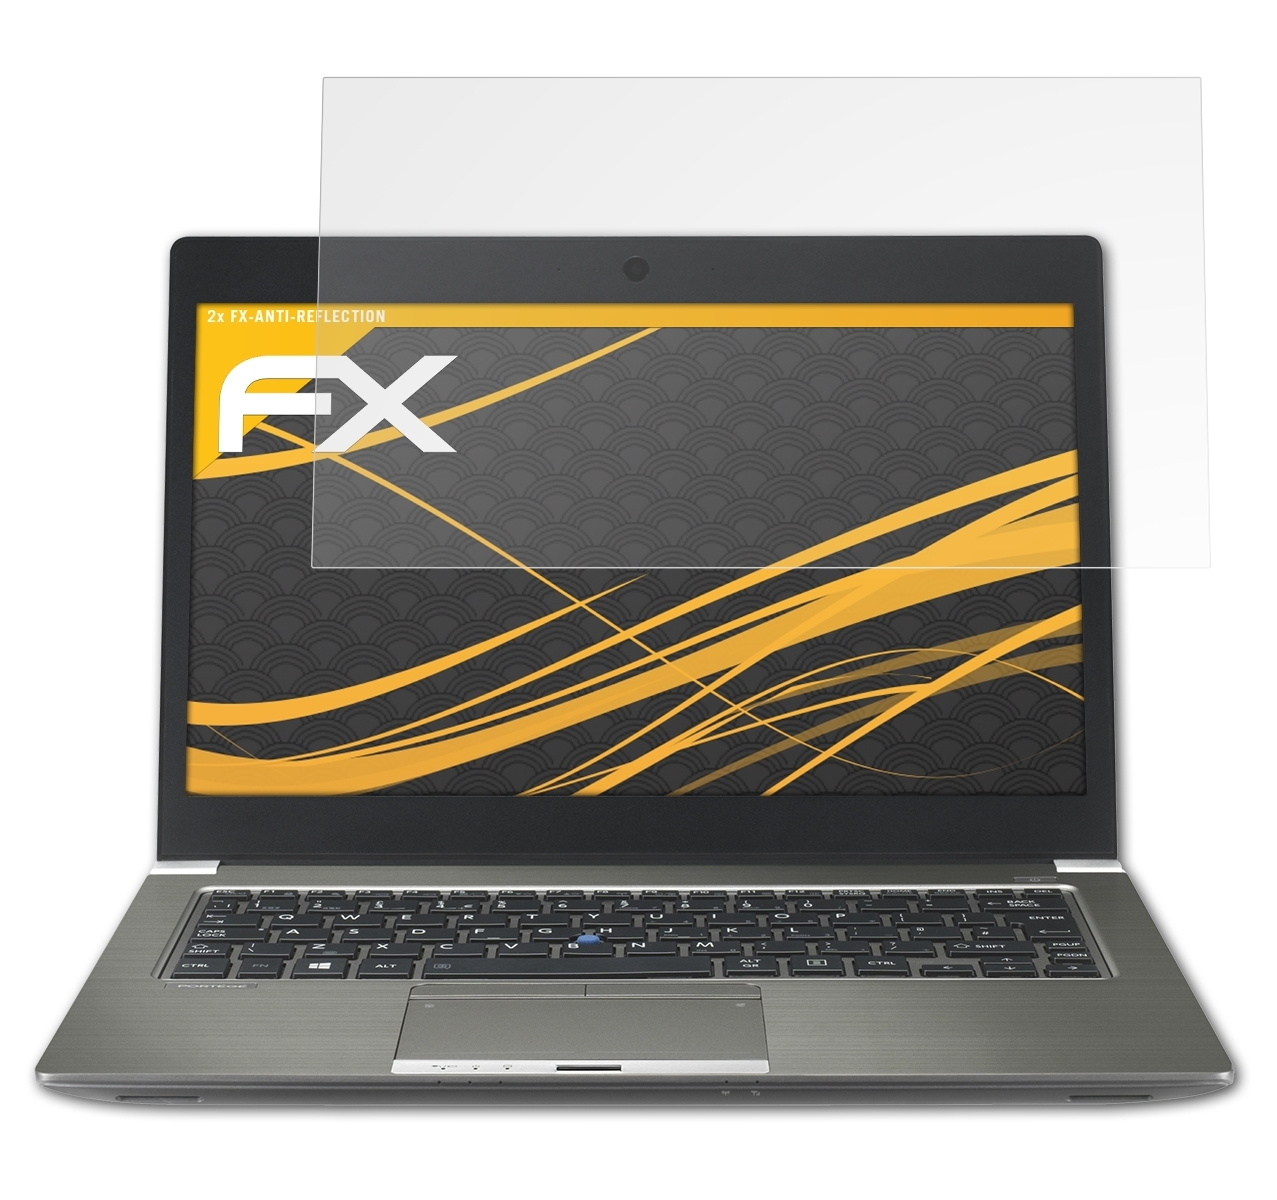 Toshiba FX-Antireflex 2x Portege ATFOLIX Z30) Displayschutz(für